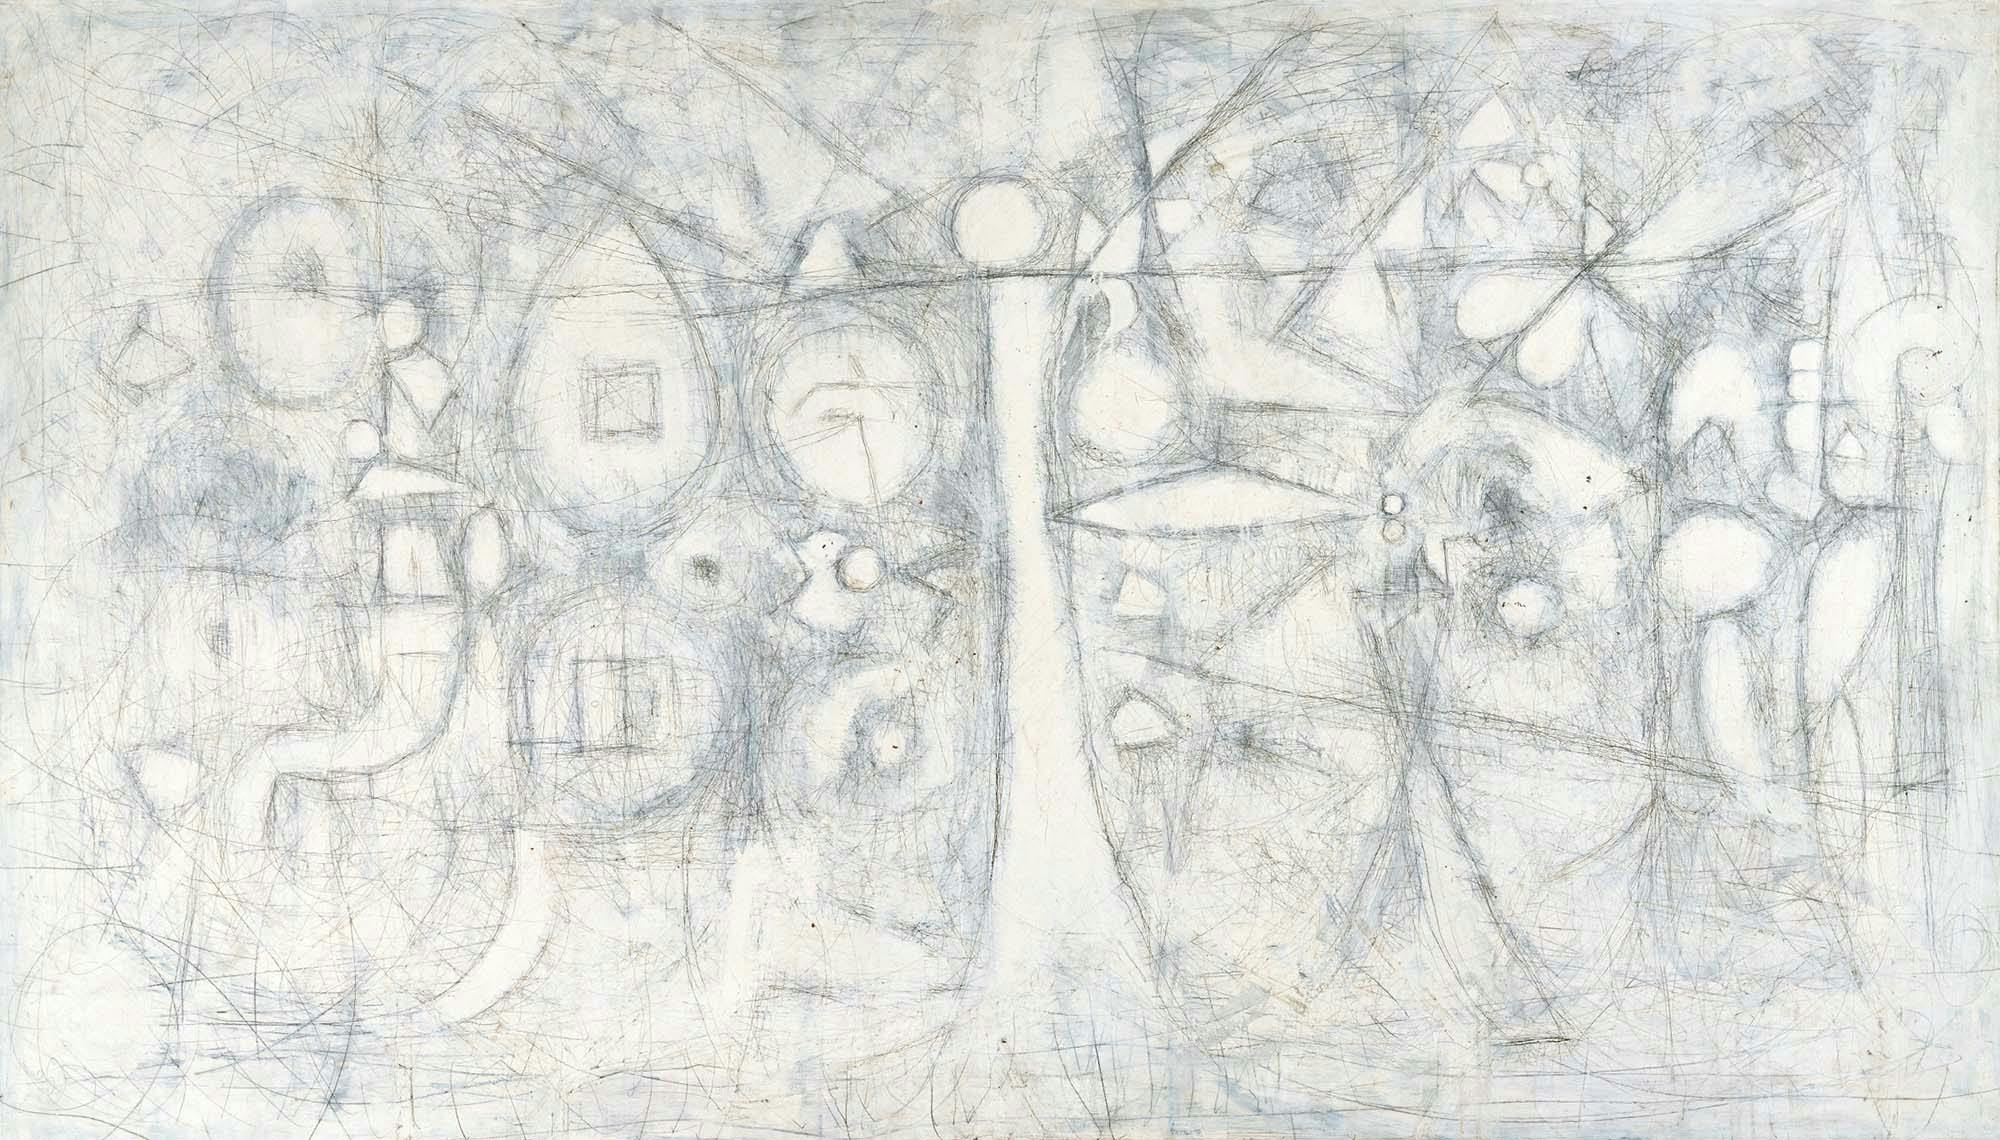 White Garden, Fugue
1951
Oil and graphite on linen
48 x 84 in. (121.9 x 213.4 cm)
 – The Richard Pousette-Dart Foundation